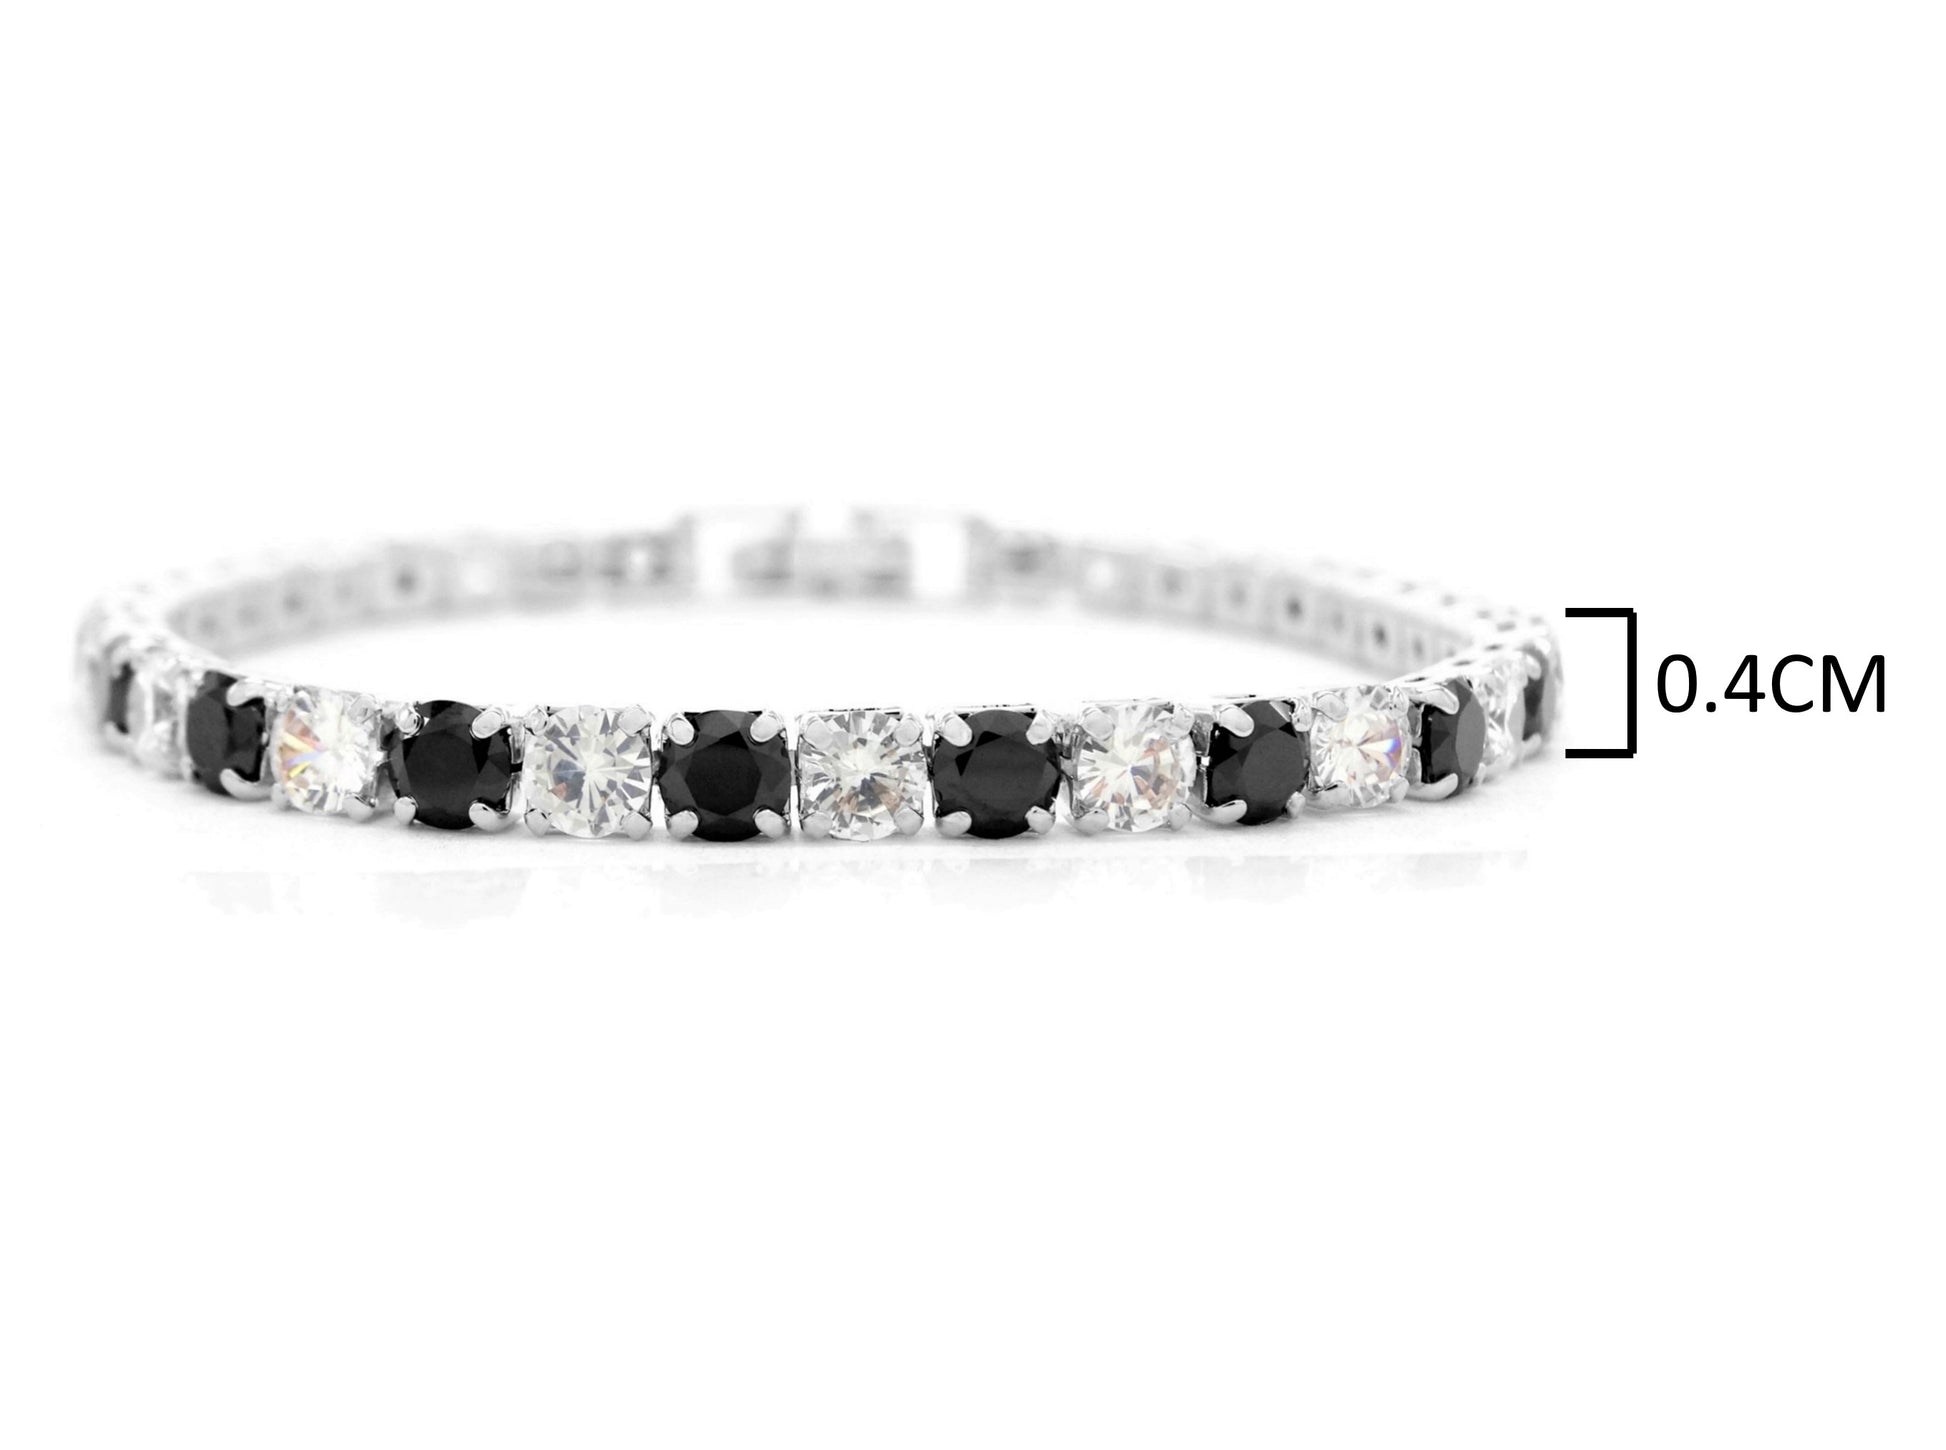 Black and white gems white gold tennis bracelet MEASUREMENT